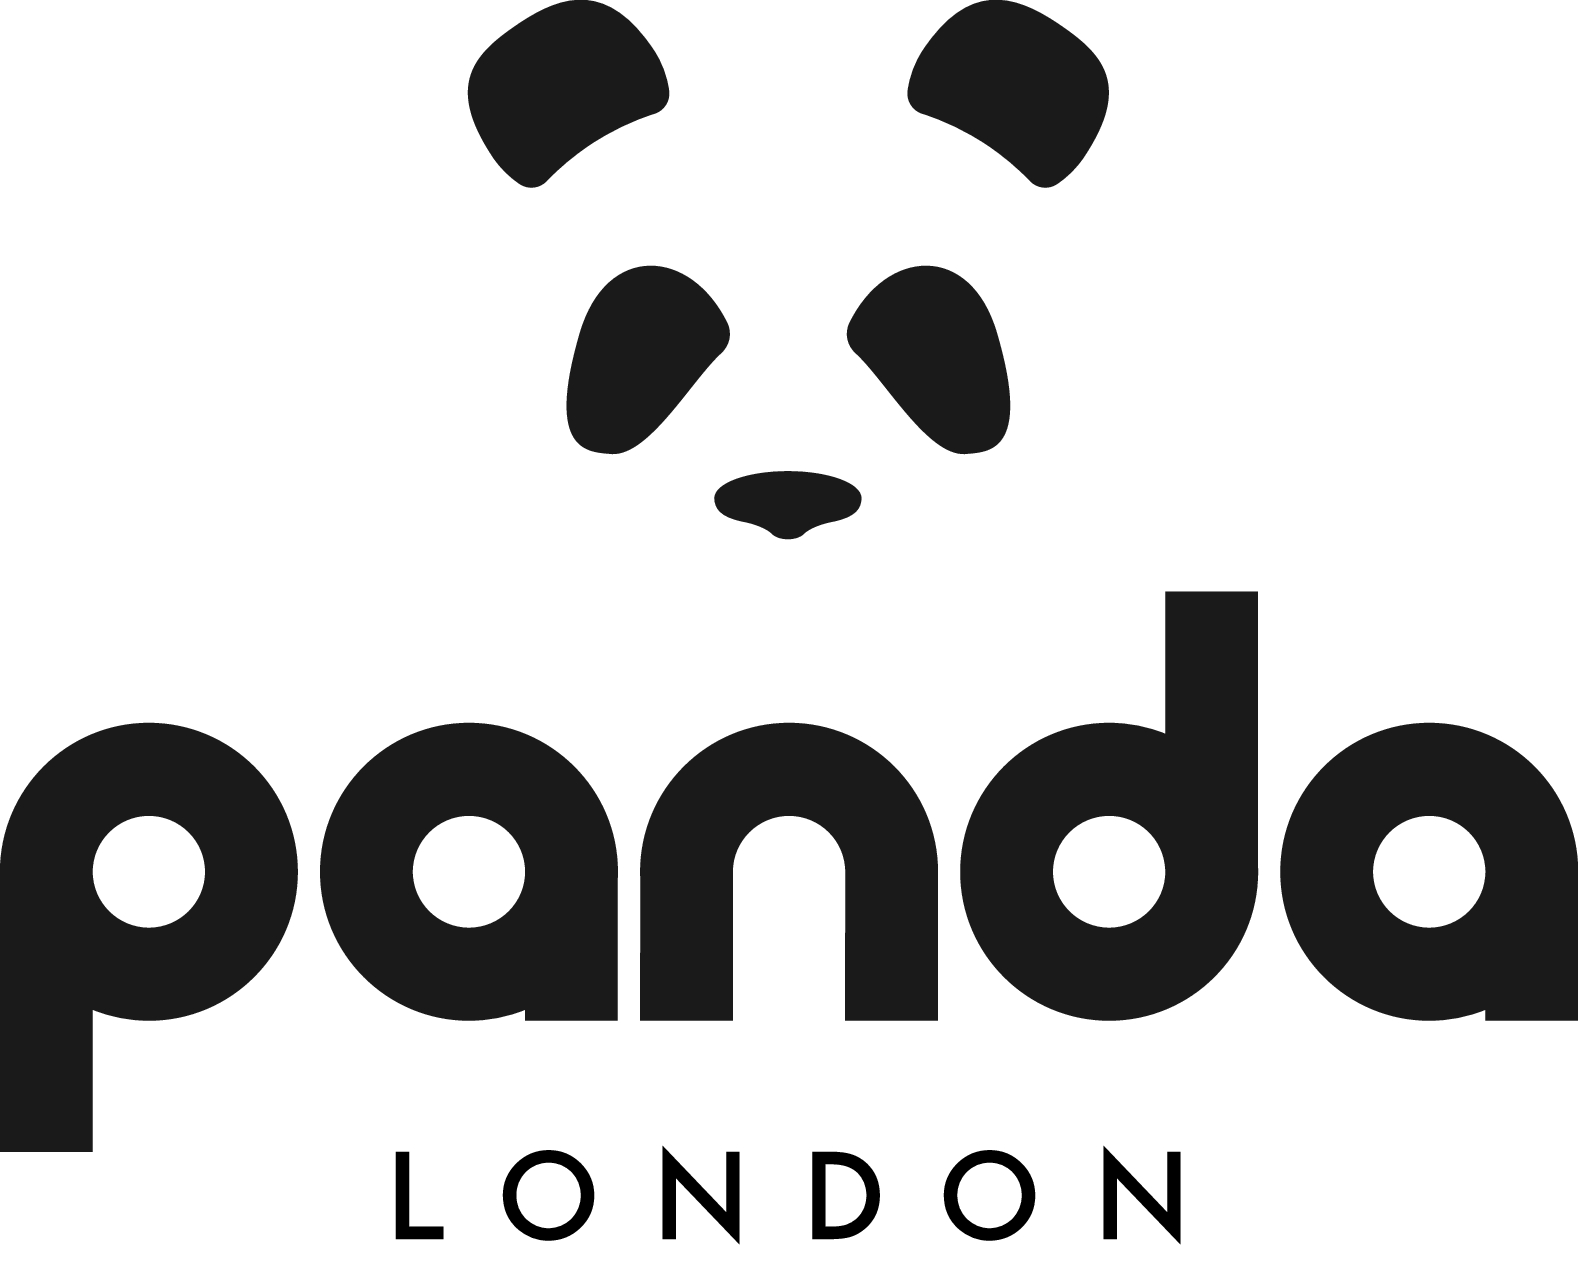  Panda London discount code